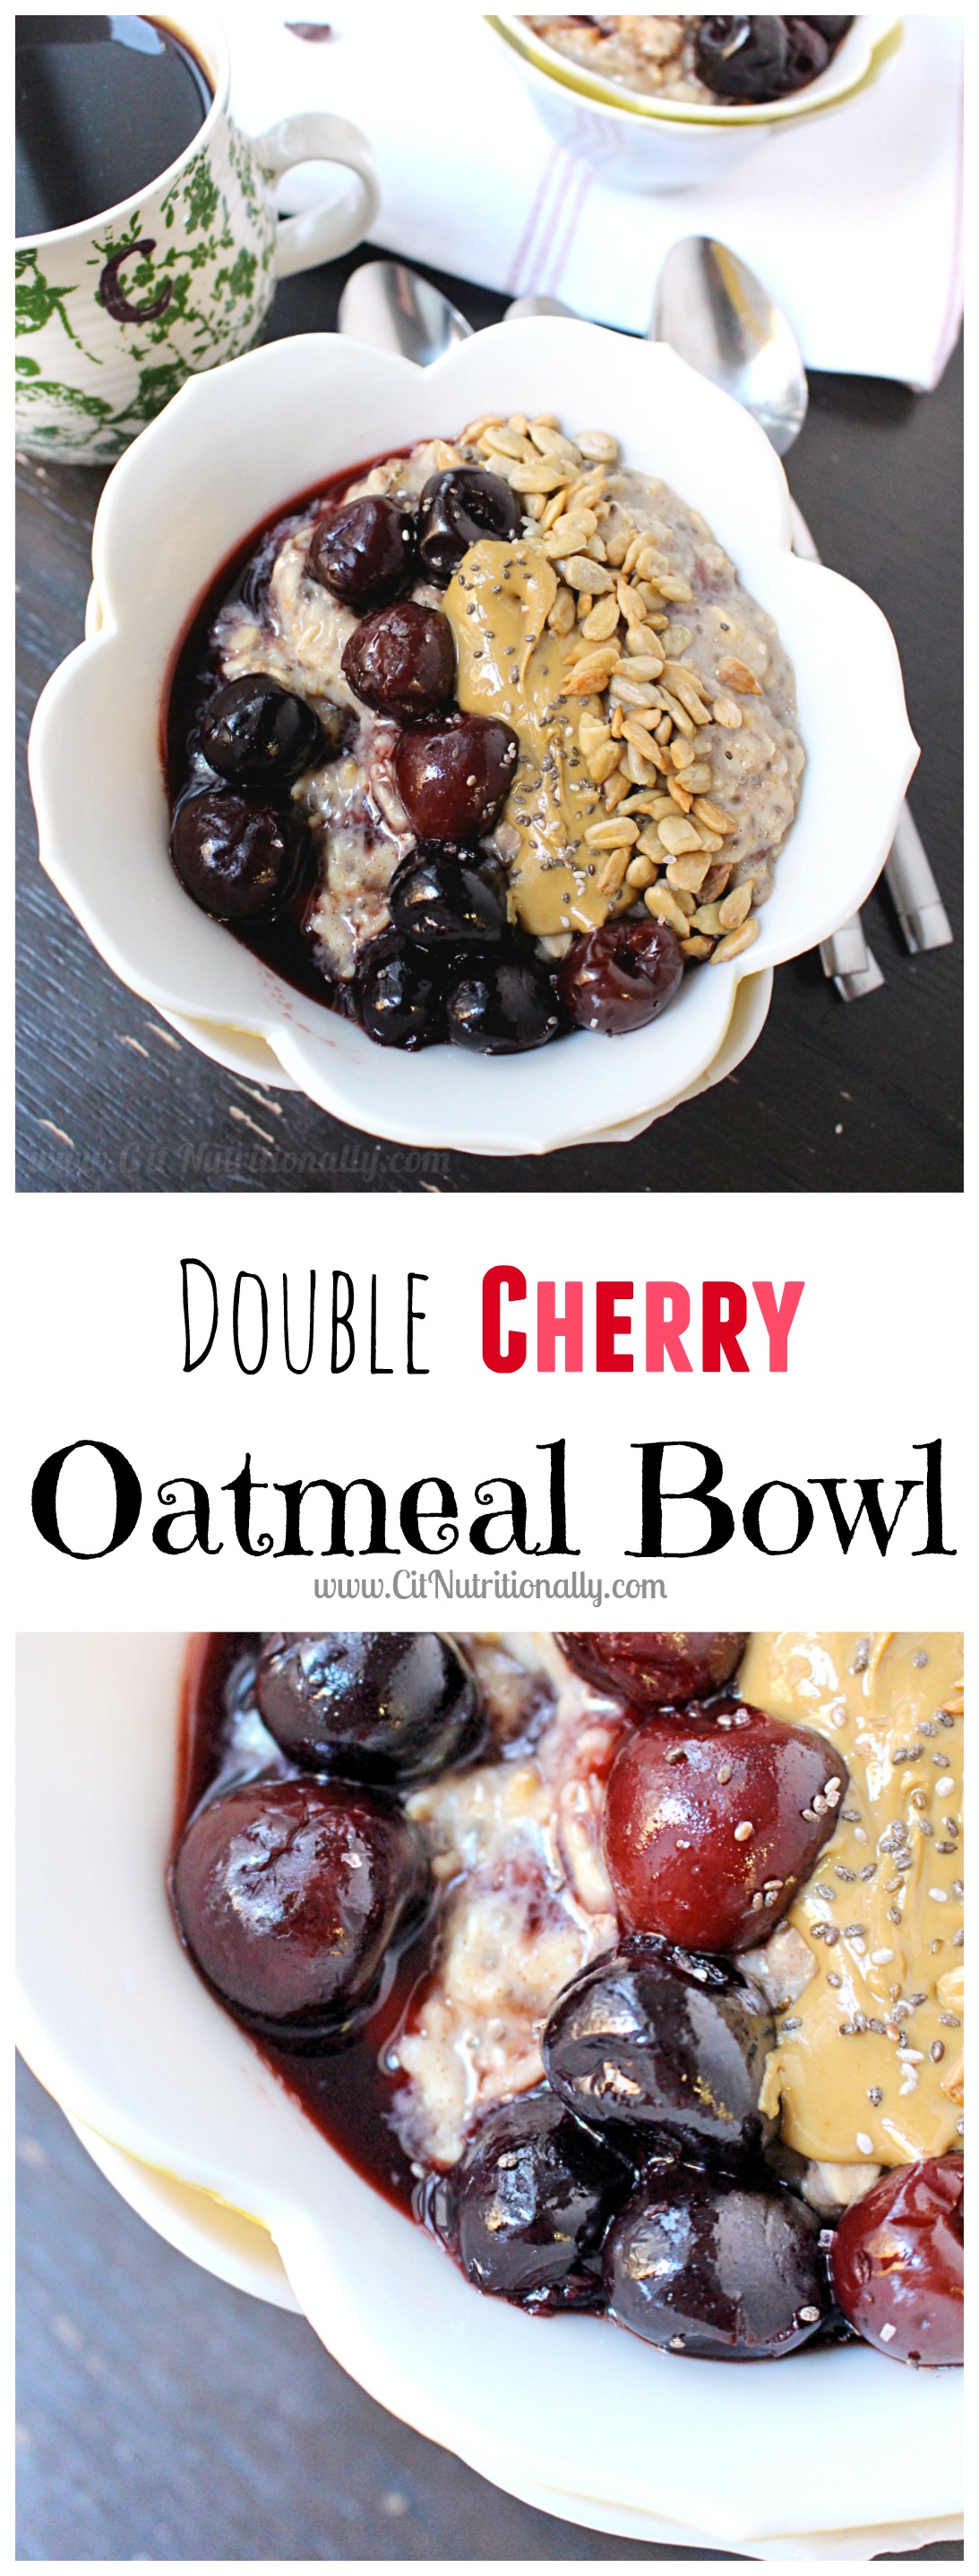 Double Cherry Oatmeal Bowl + WIAW 17 | C it Nutritionally